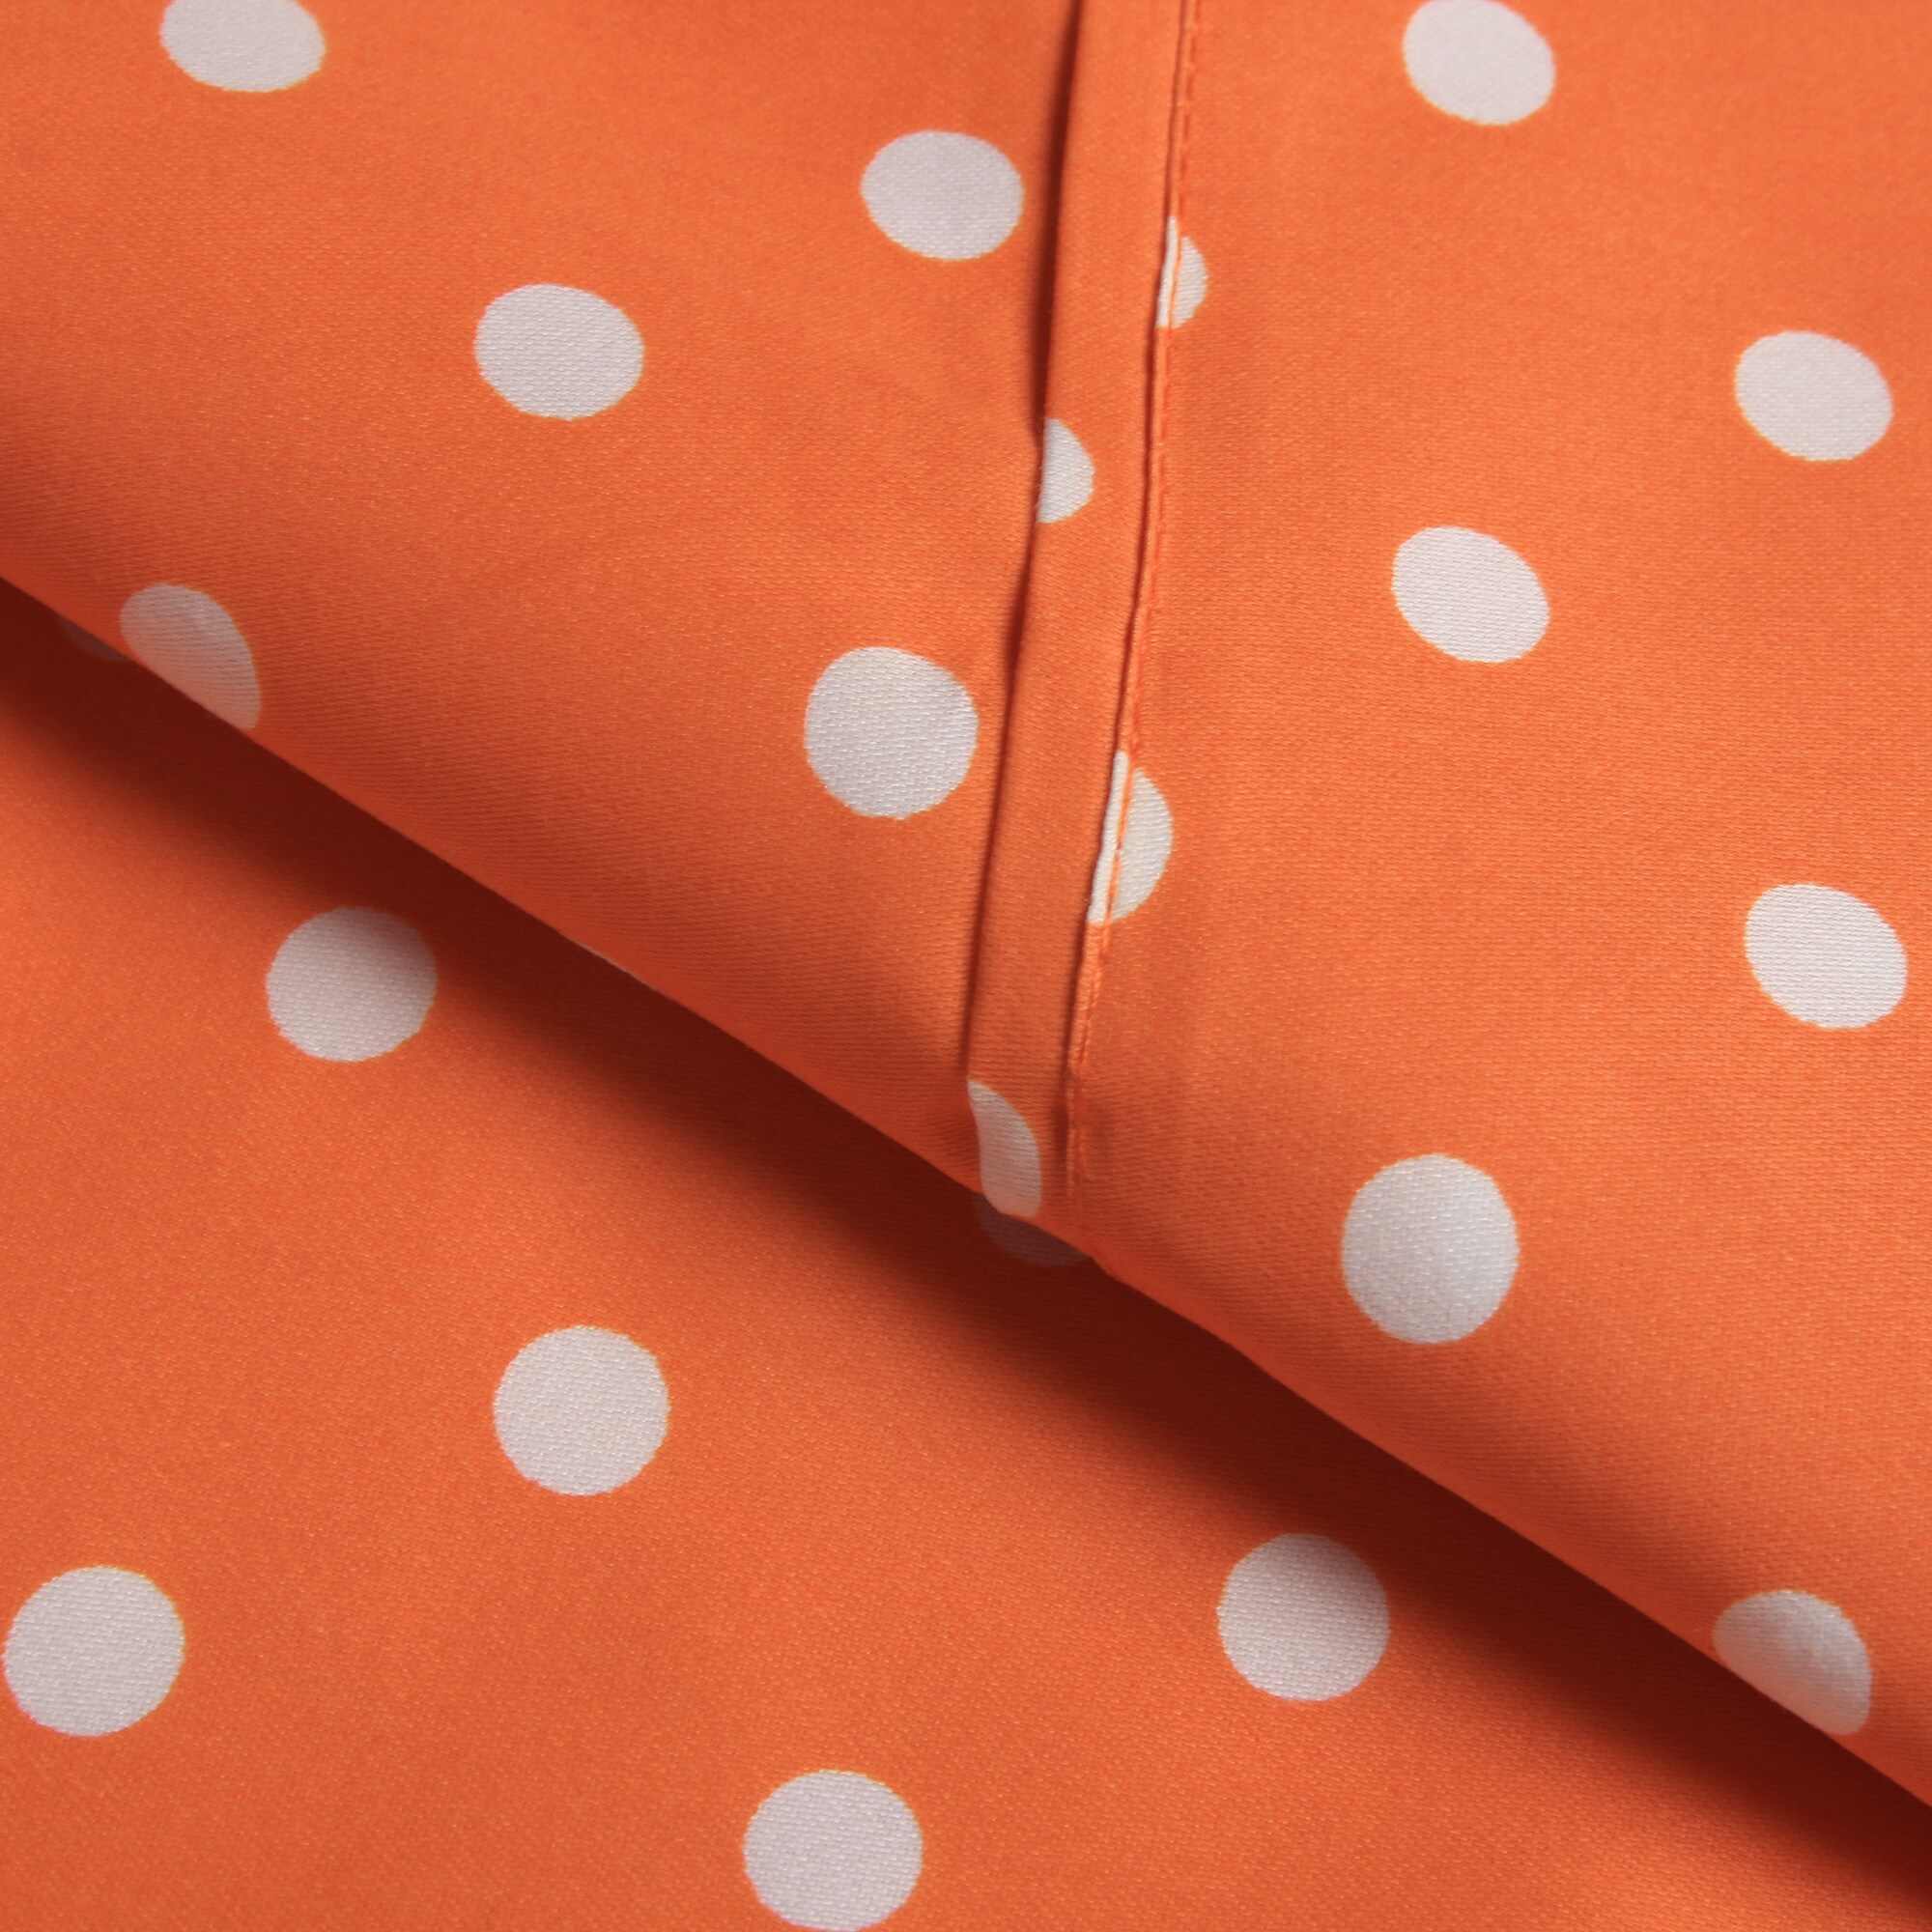 Home City Inc. Wrinkle Resistant Polka Dot Sheet Set Orange Size Full